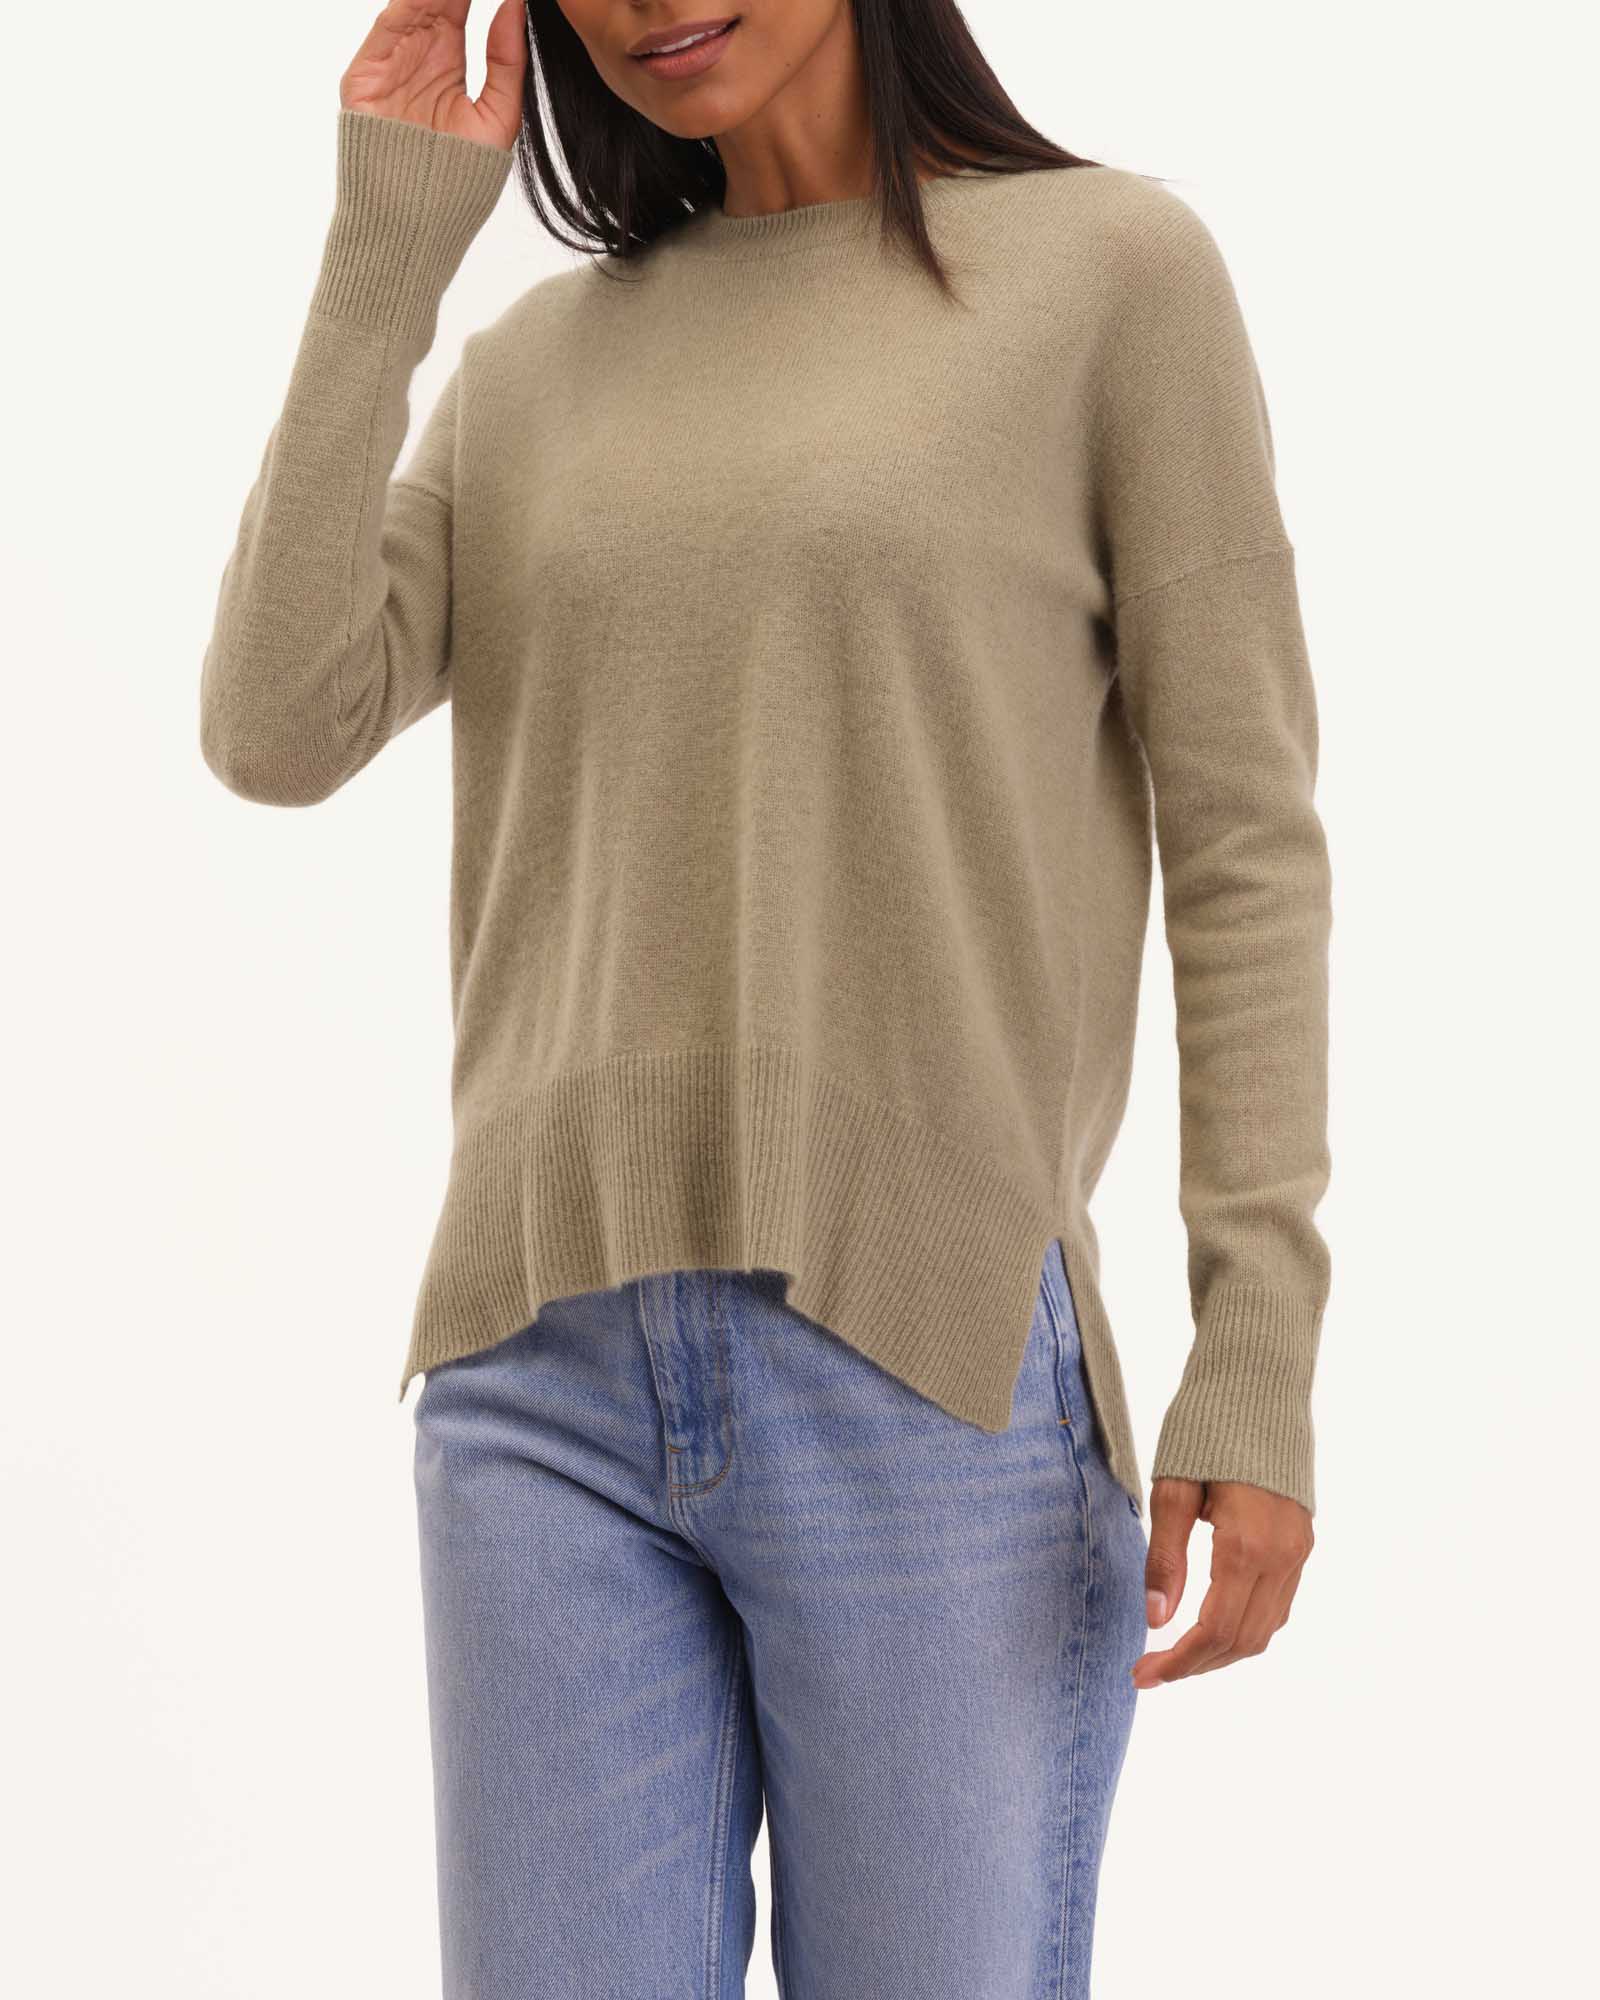 Shop Classic Cashmere Crewneck Sweater | T Tahari | JANE + MERCER